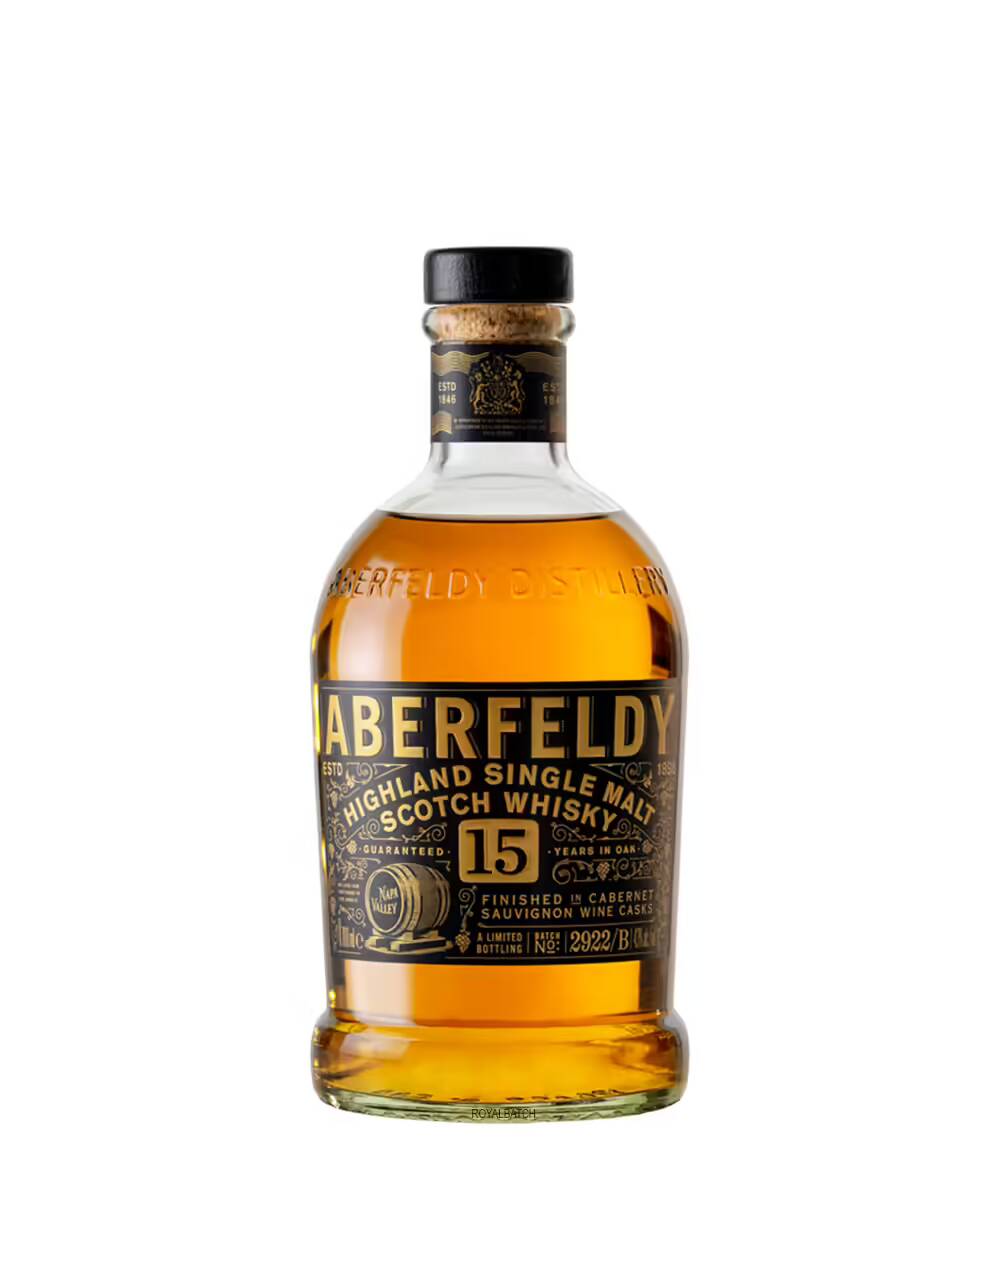 Aberfeldy 15 Year Old Finished in Cabernet Sauvignon wine casks Scotch Whisky